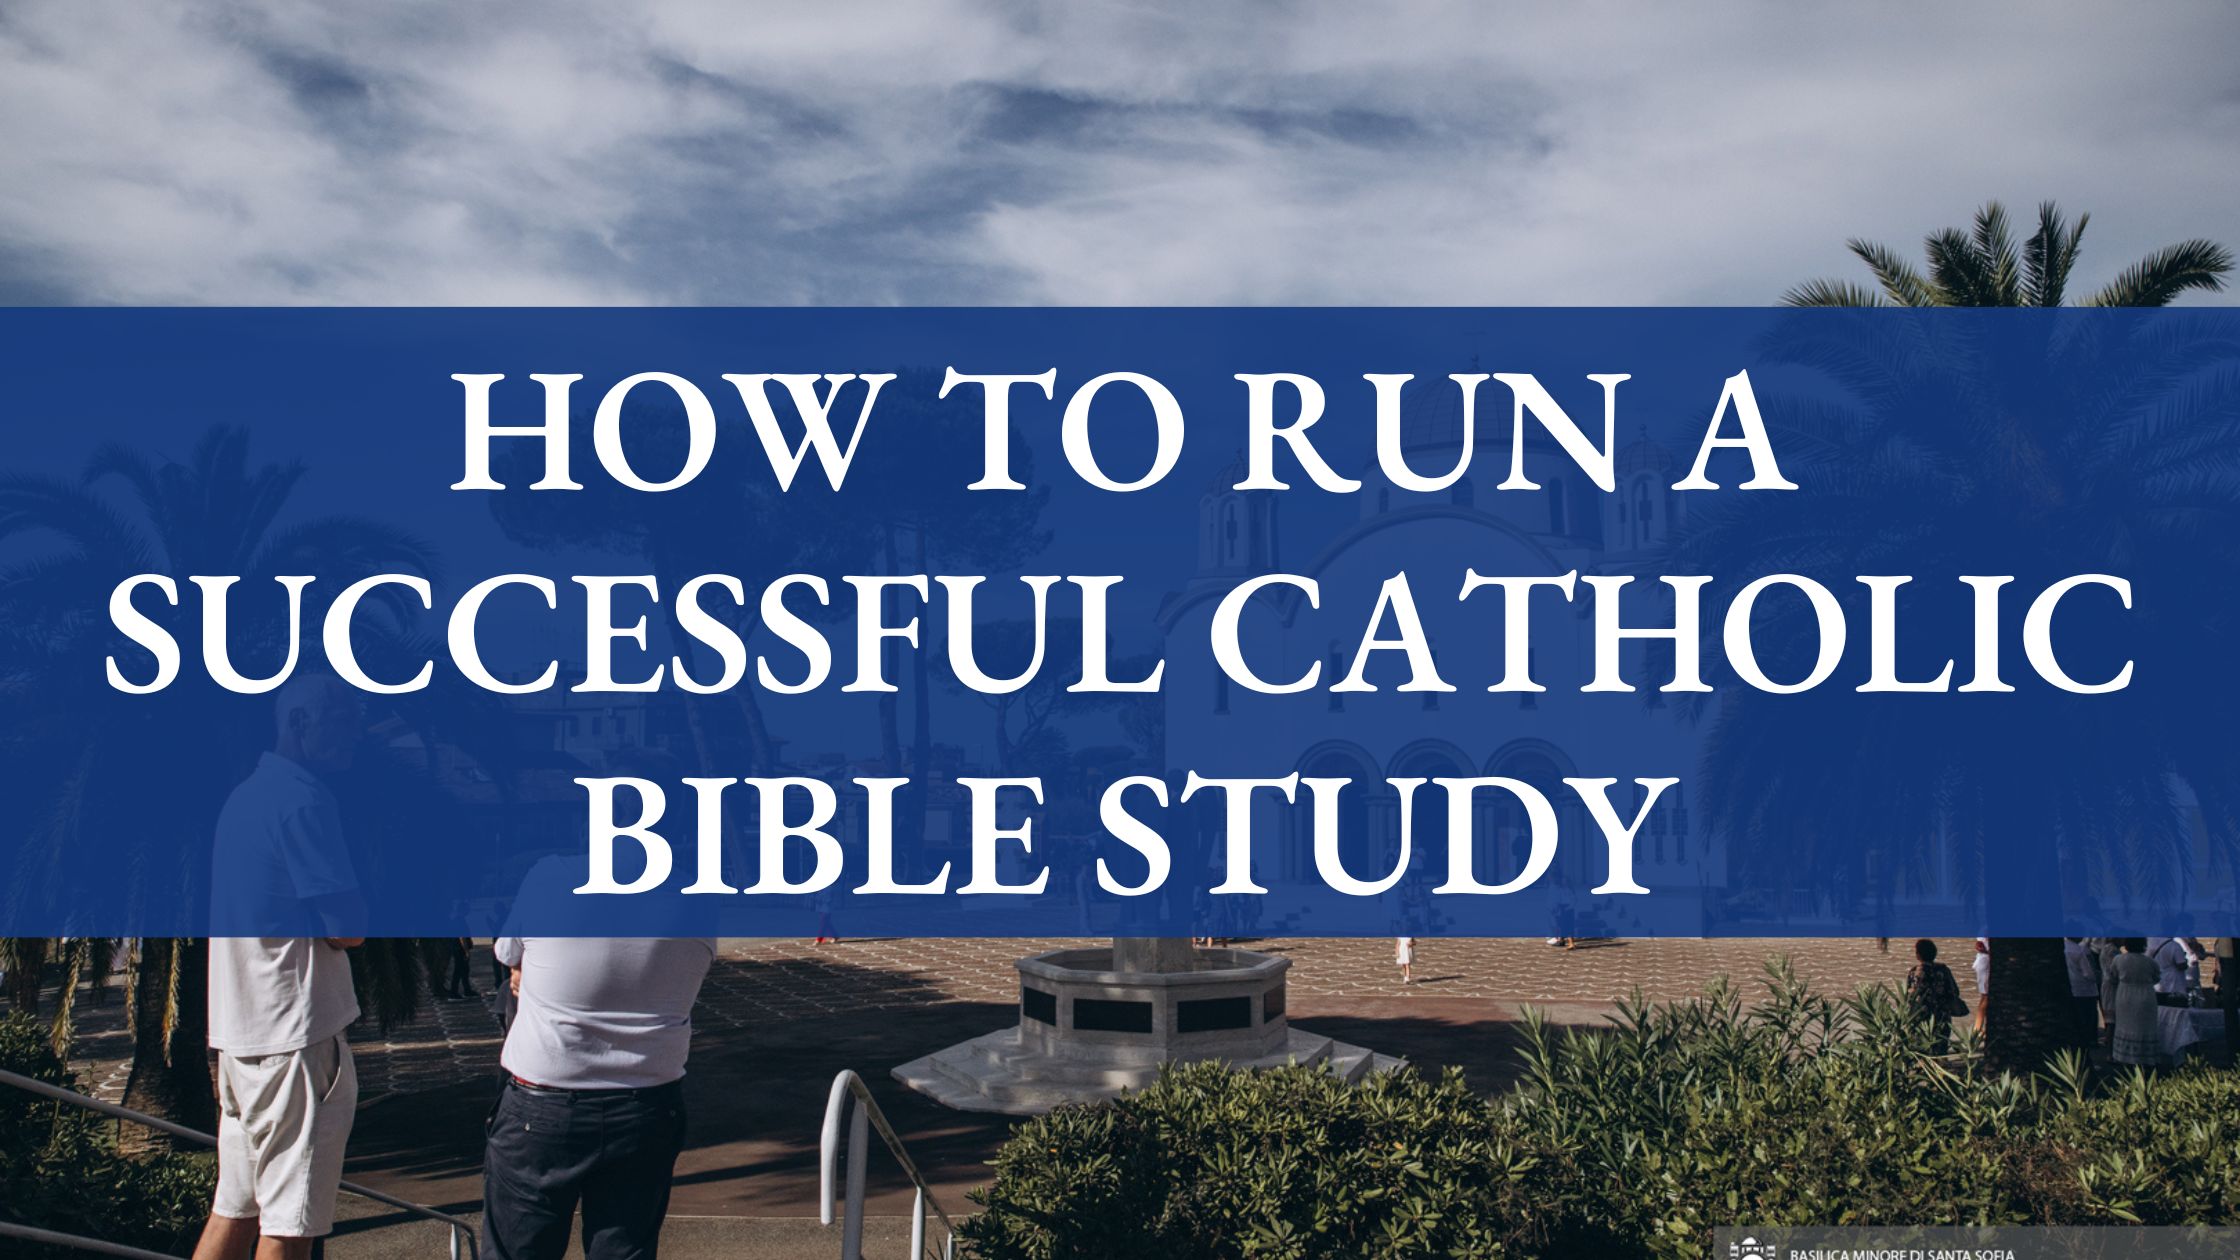 How to Run a Successful Catholic Bible Study